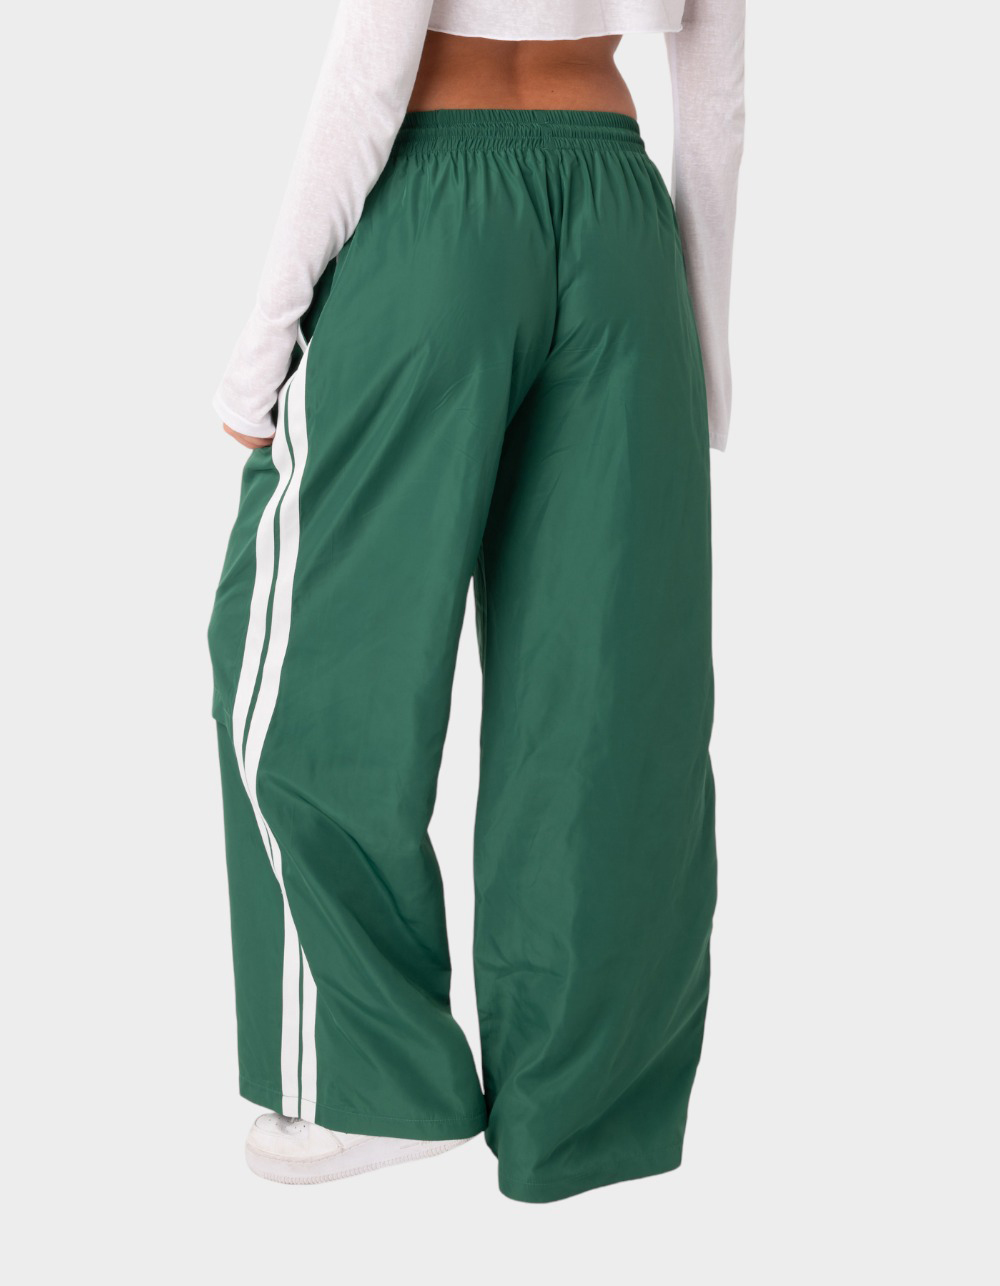 Brilliant Basics Women's Track Pants - Green - Size Small